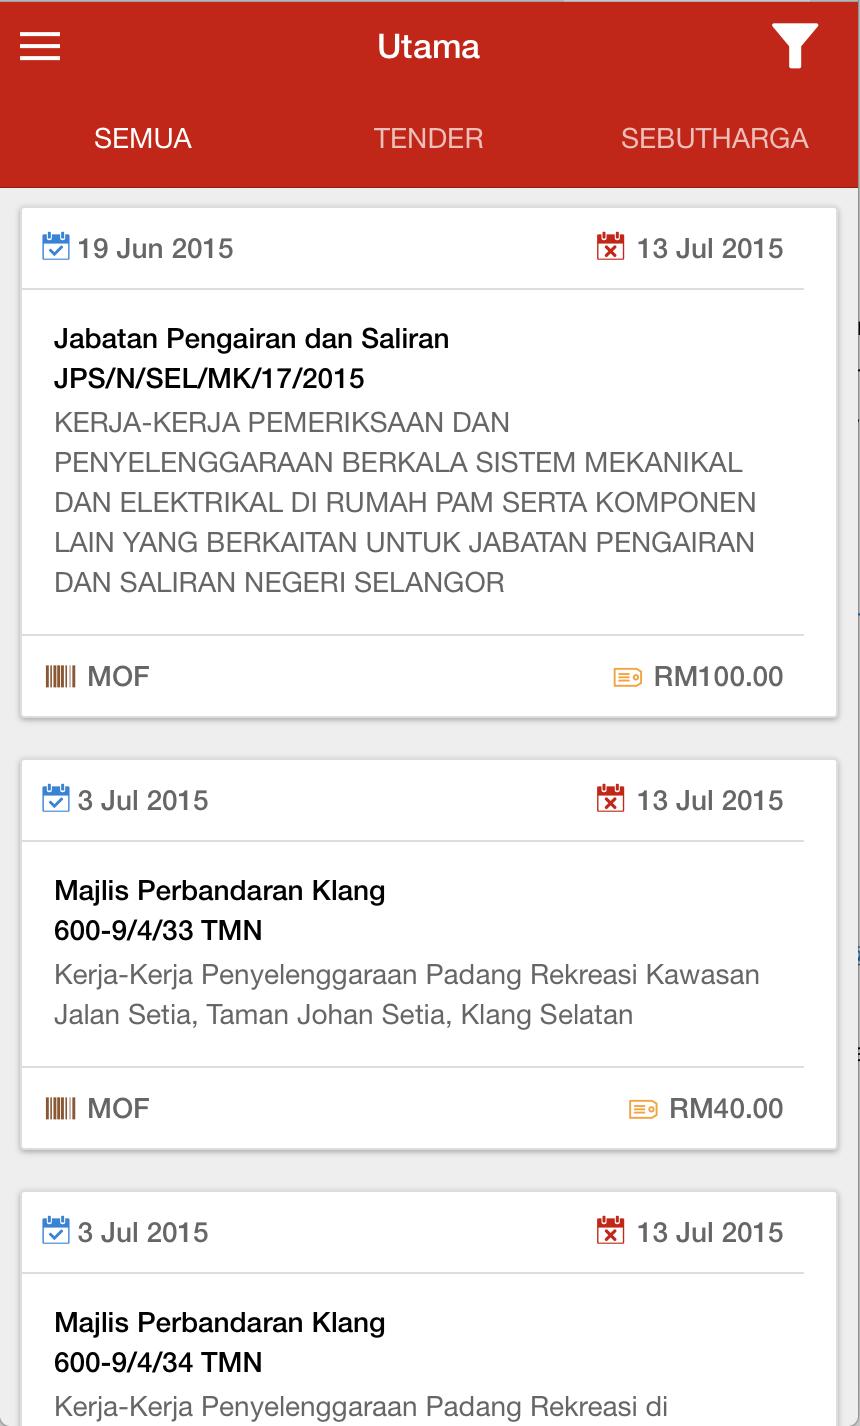 Tender Online Selangor 2 0 For Android Apk Download